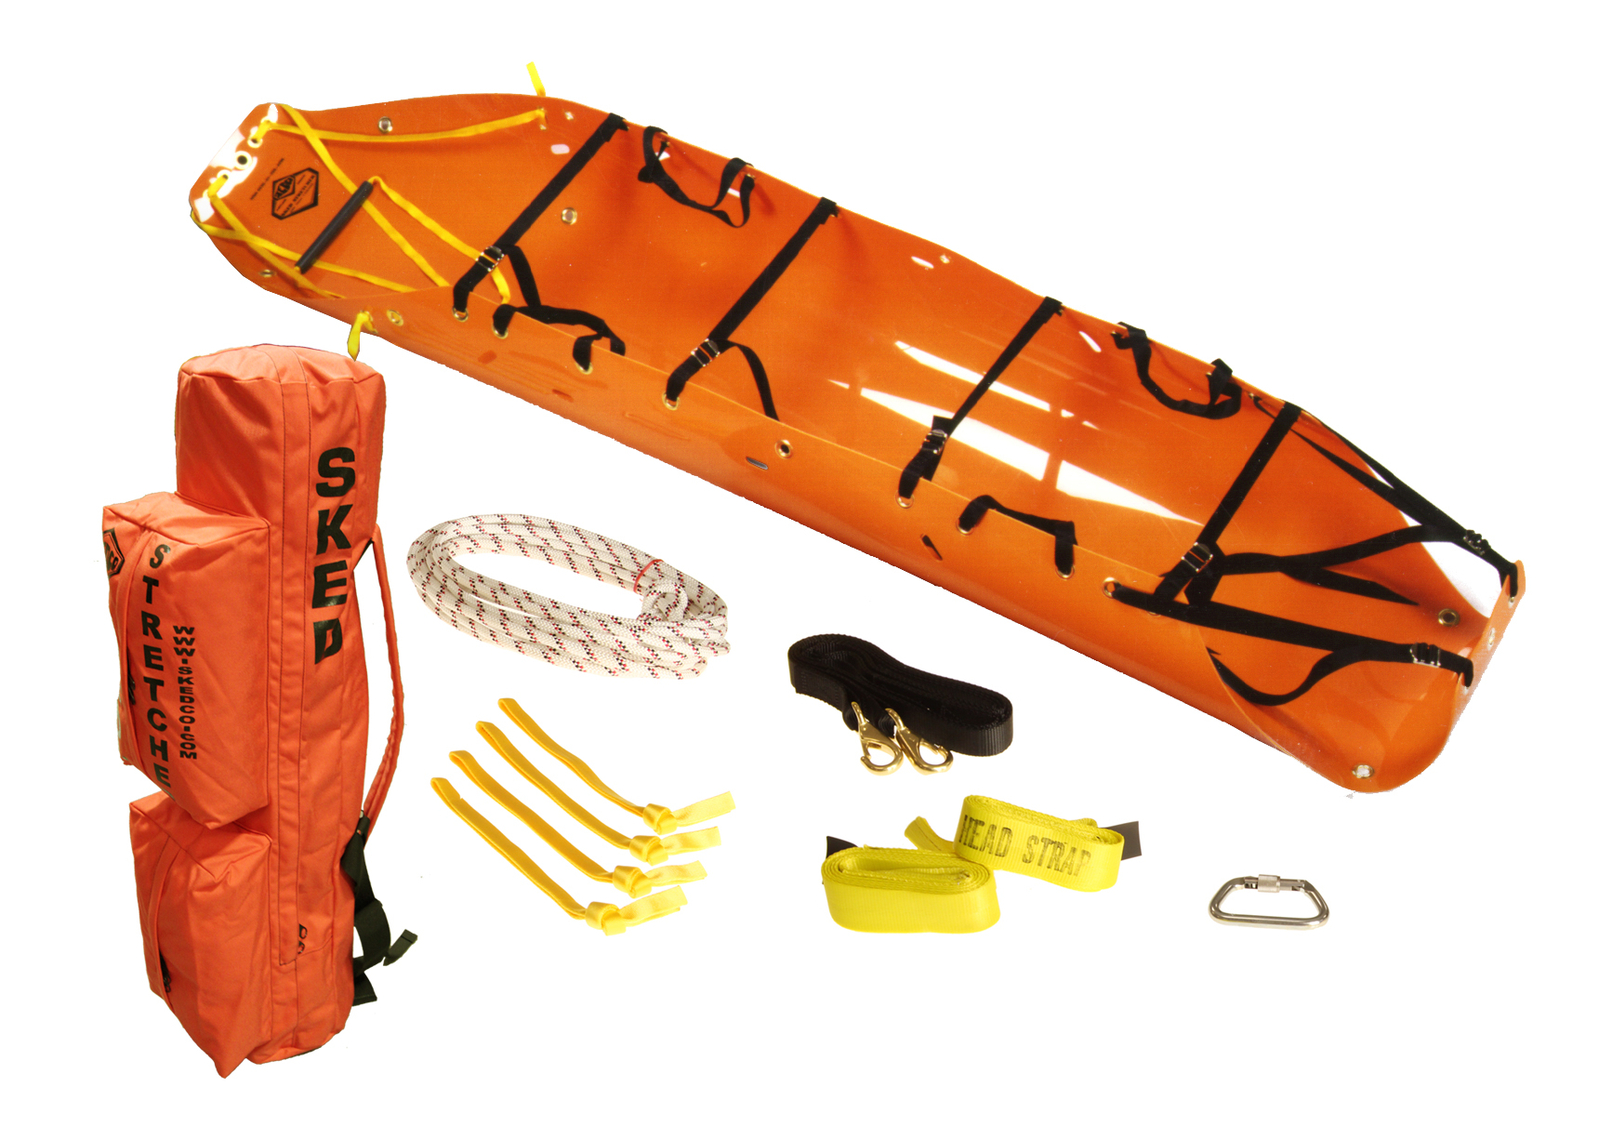 Sked® Basic Rescue System – International Orange